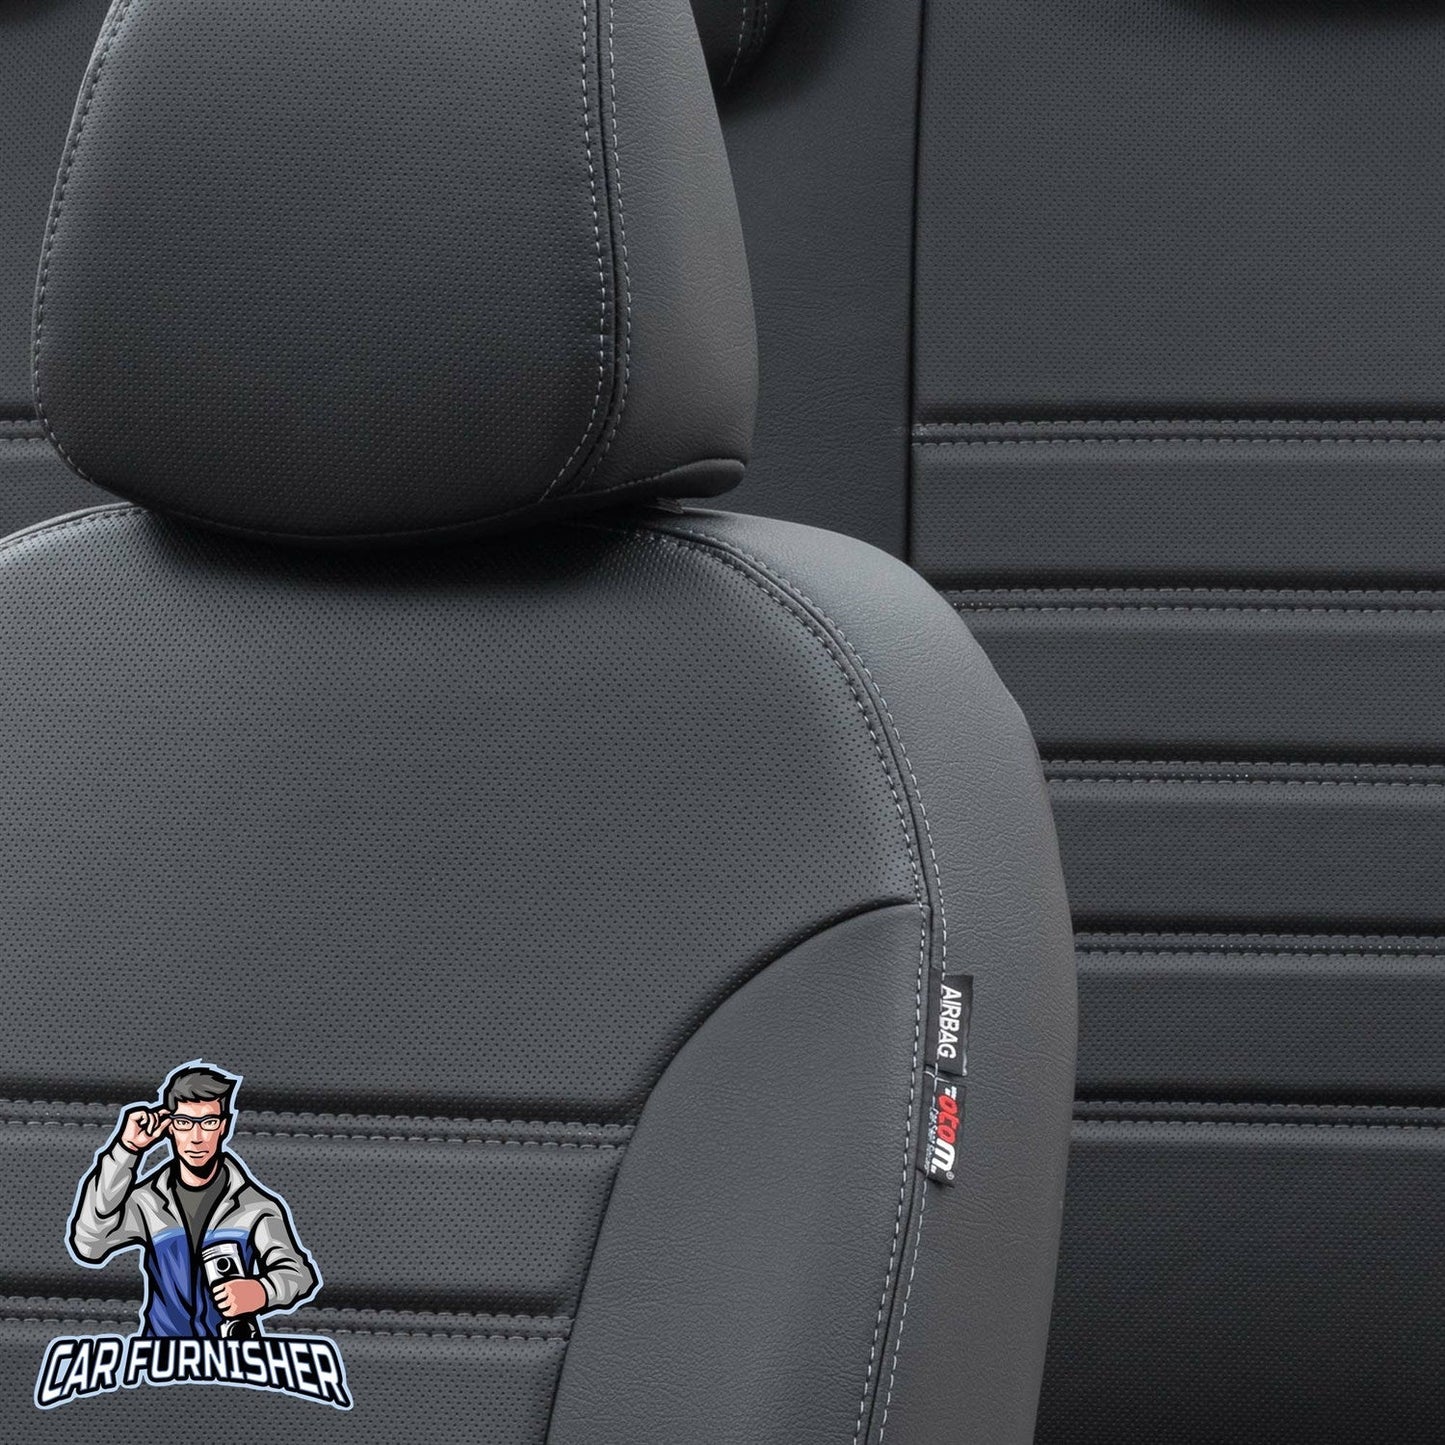 Skoda Citigo Seat Covers Istanbul Leather Design Black Leather